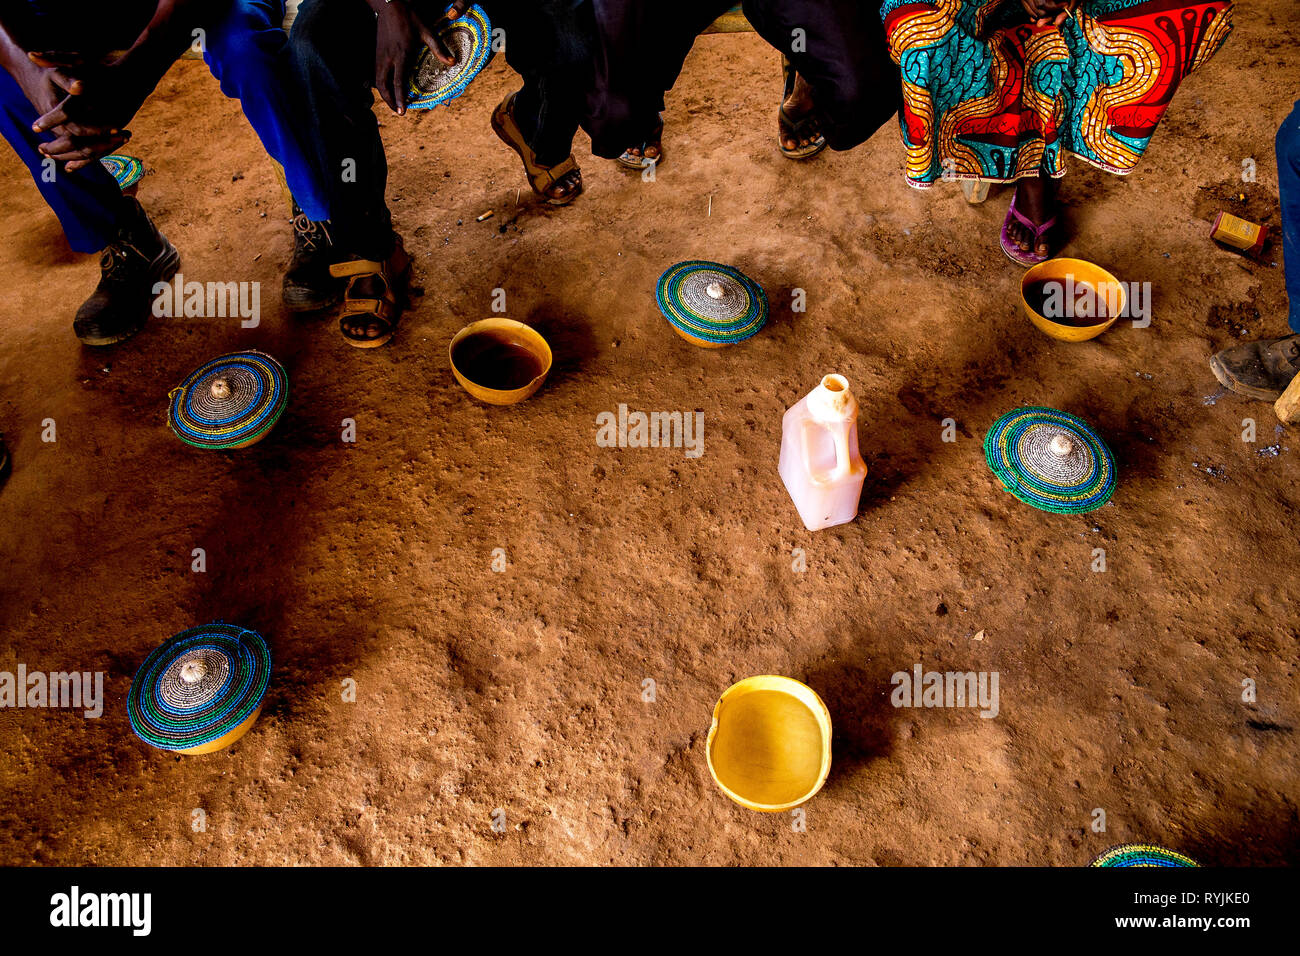 Clients of a bar drinking locally brewed dollo in Koudougou, Burkina Faso. Stock Photo